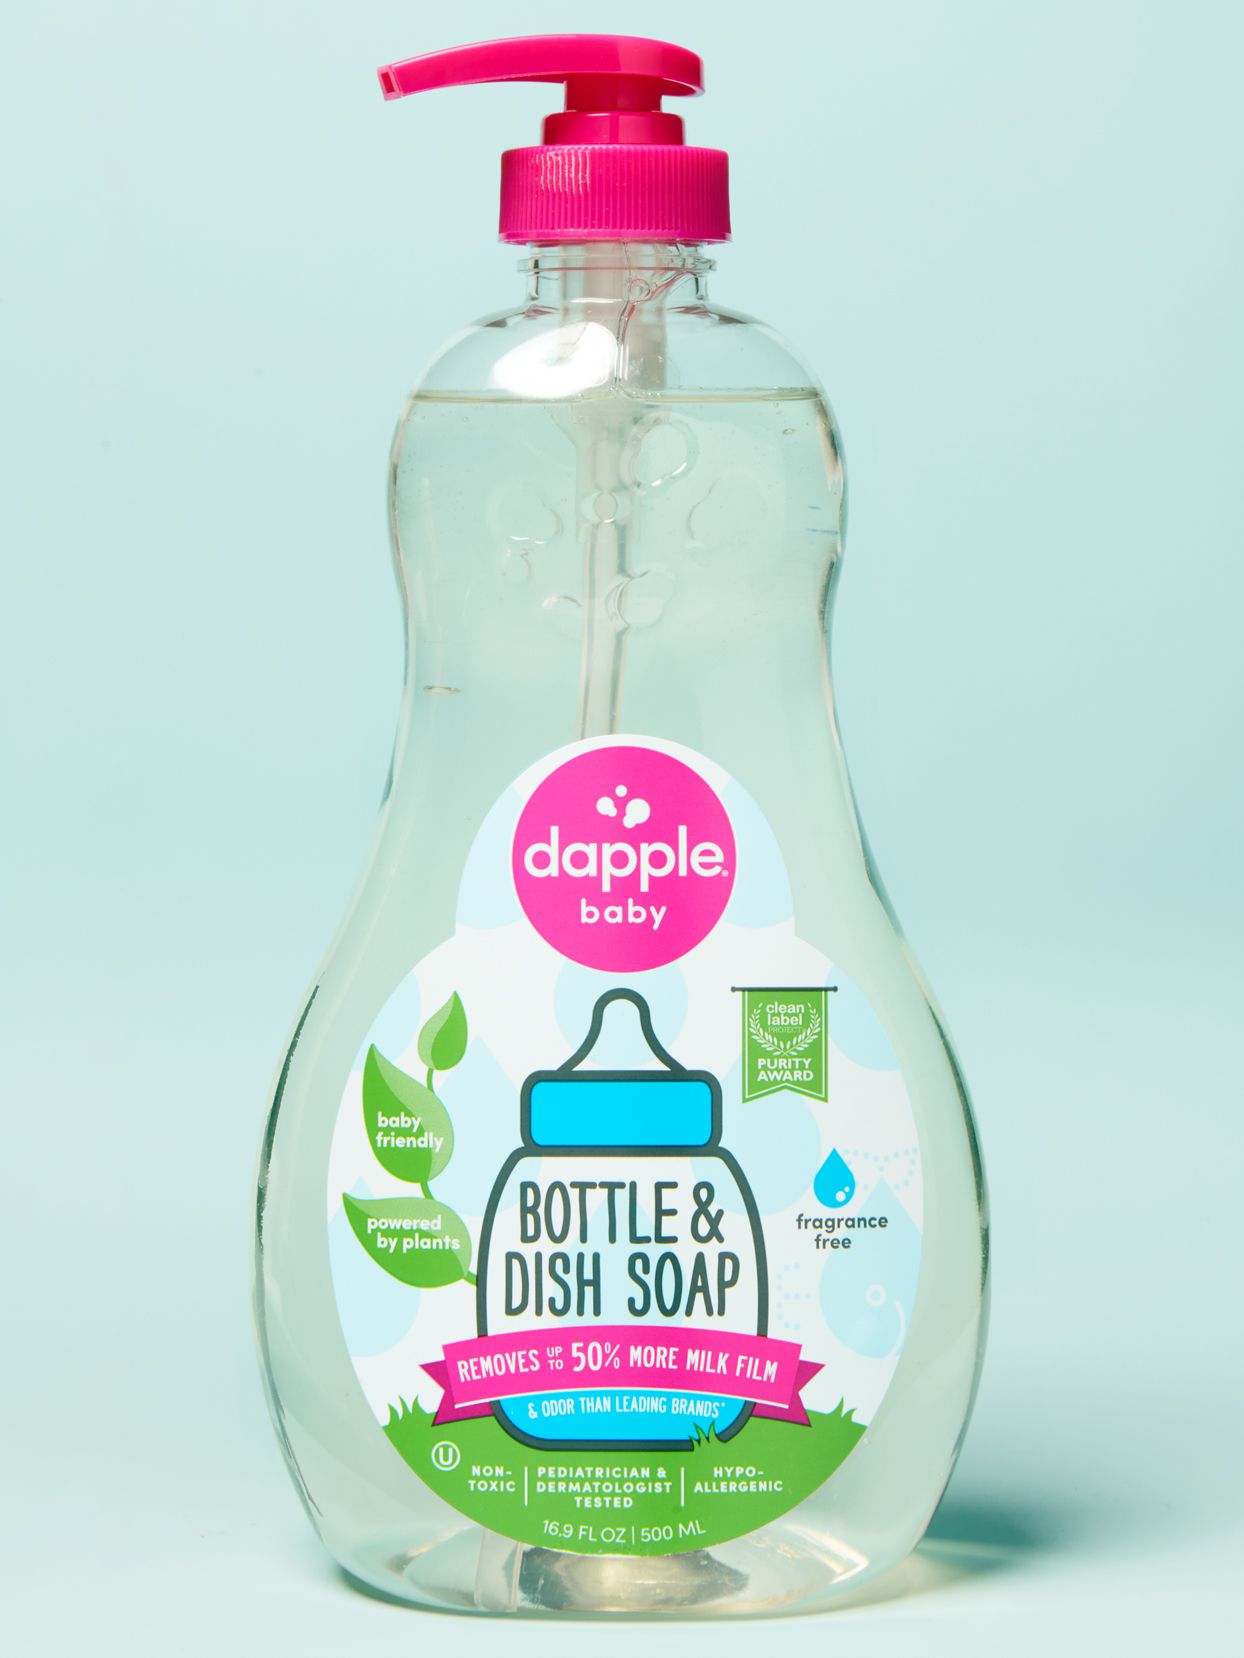 dapple baby bottle and dish soap